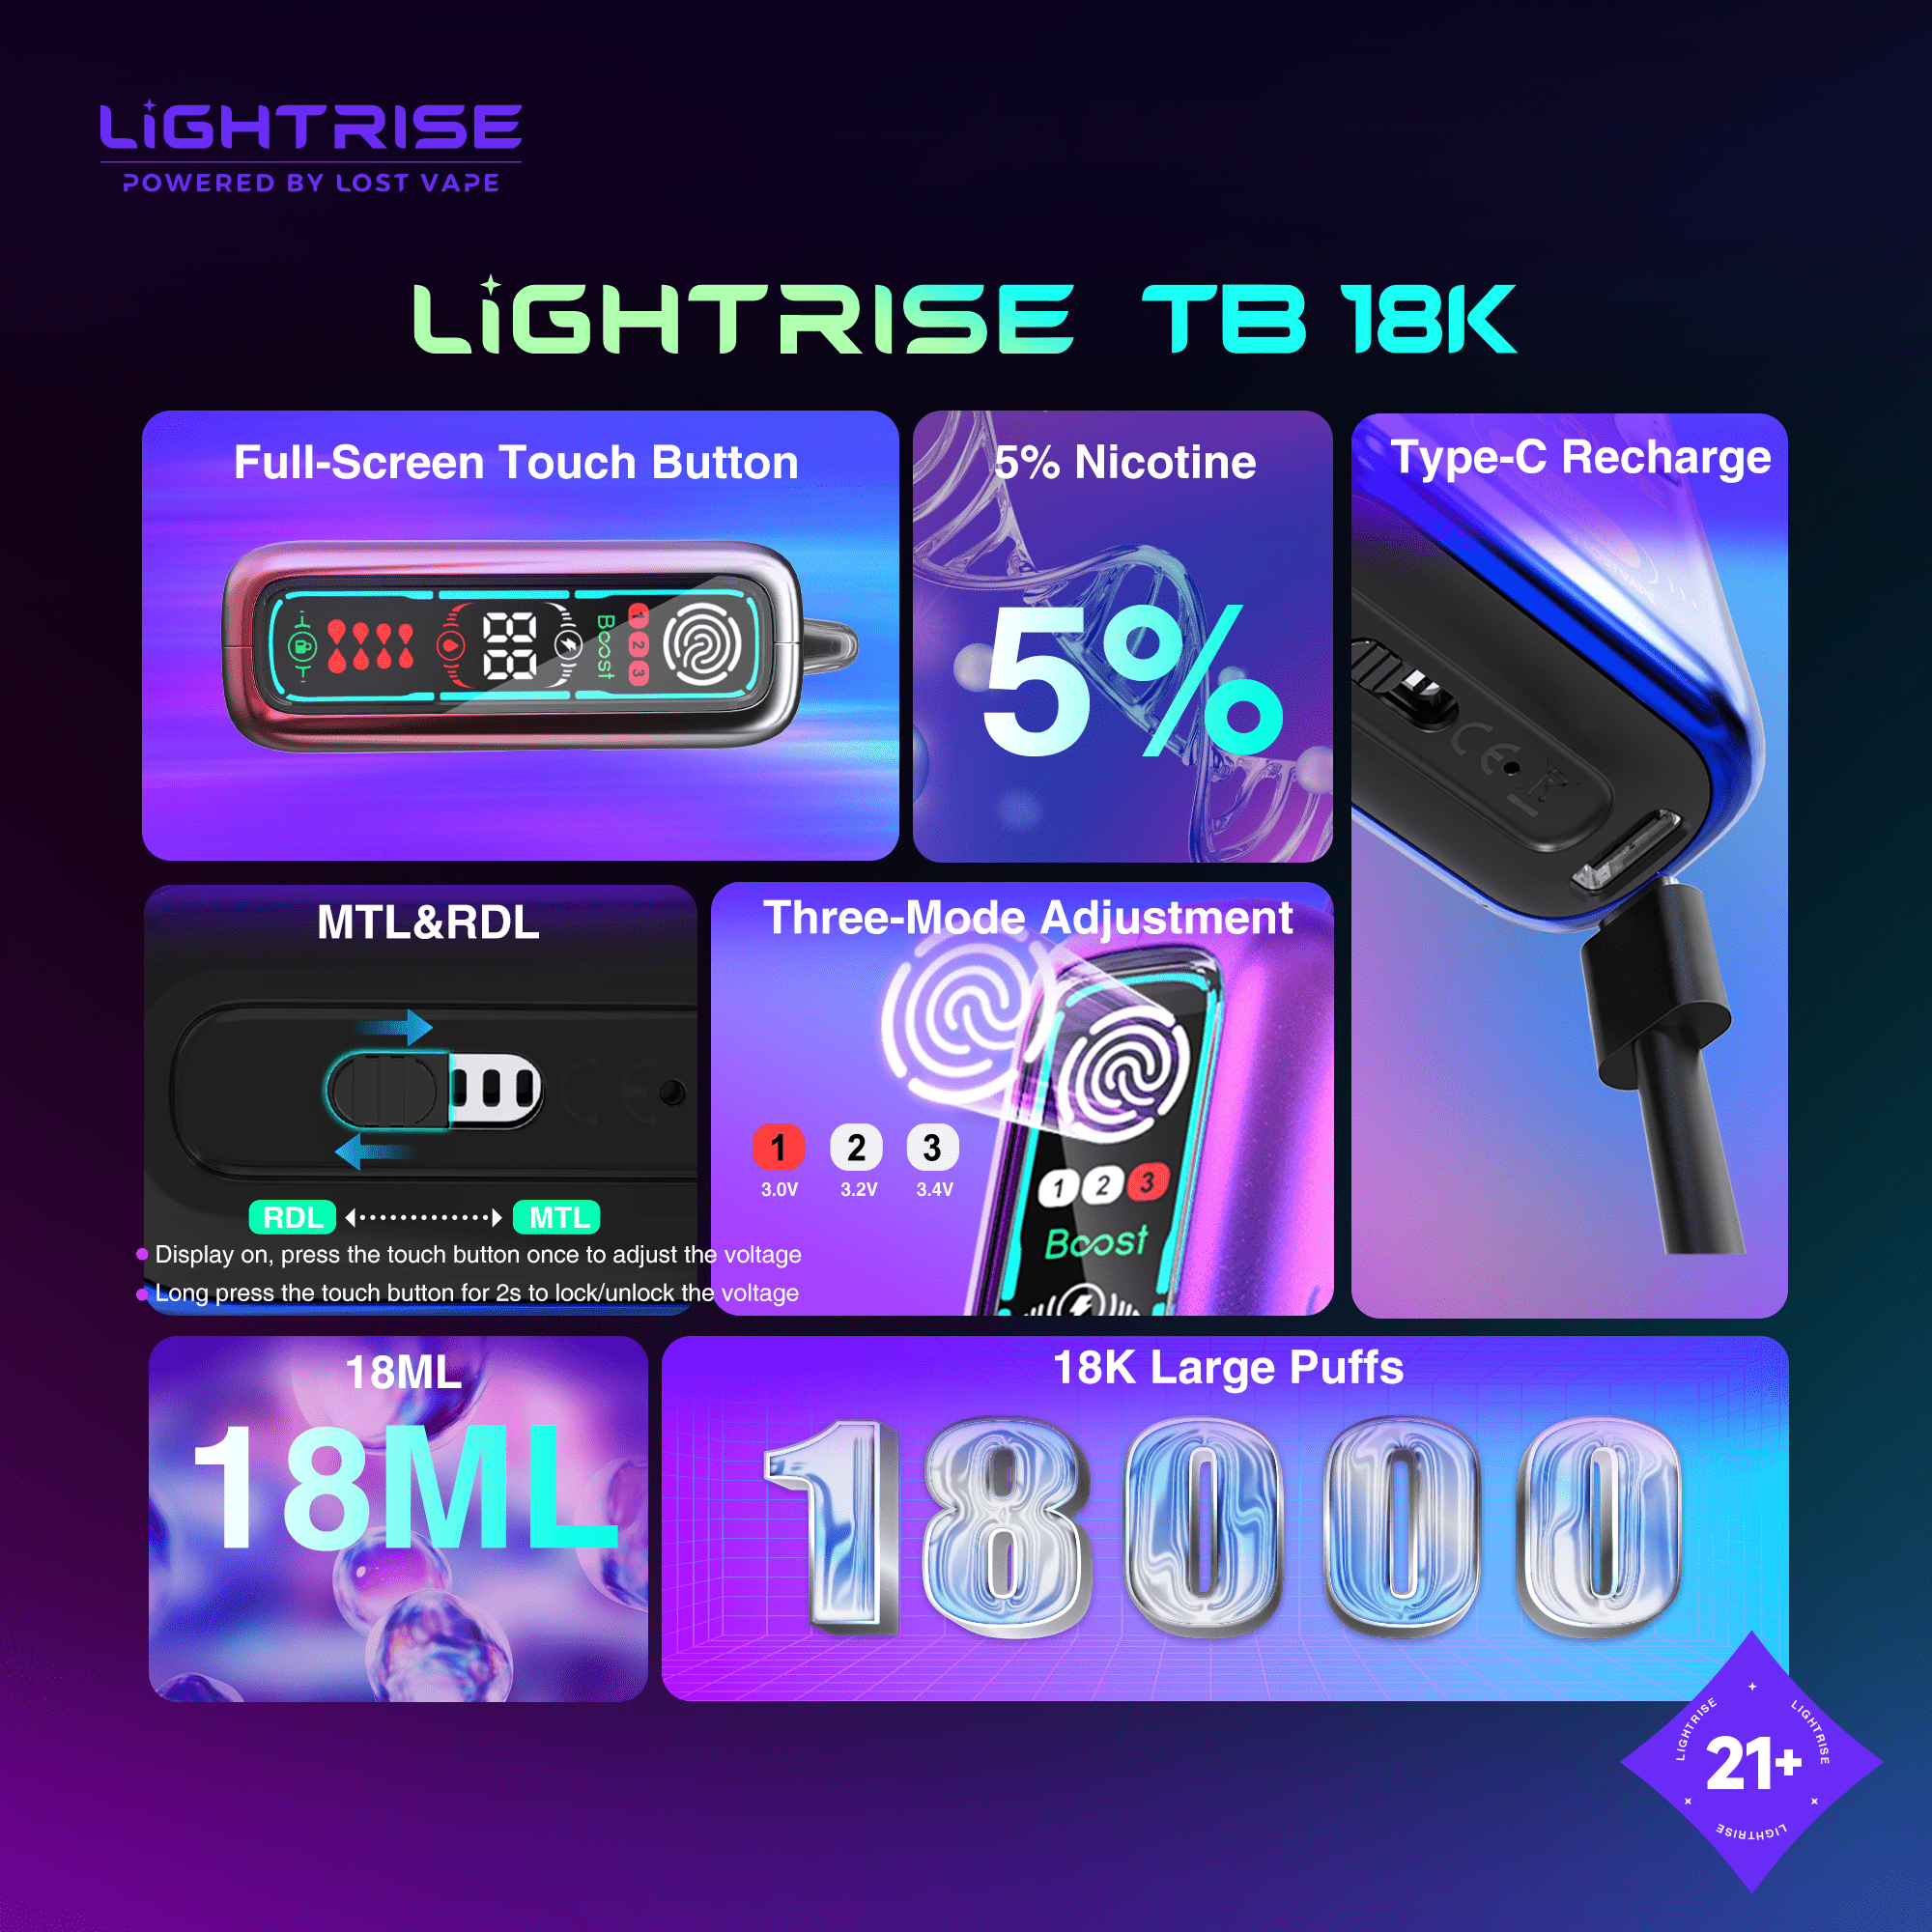 Lightrise TB 18K